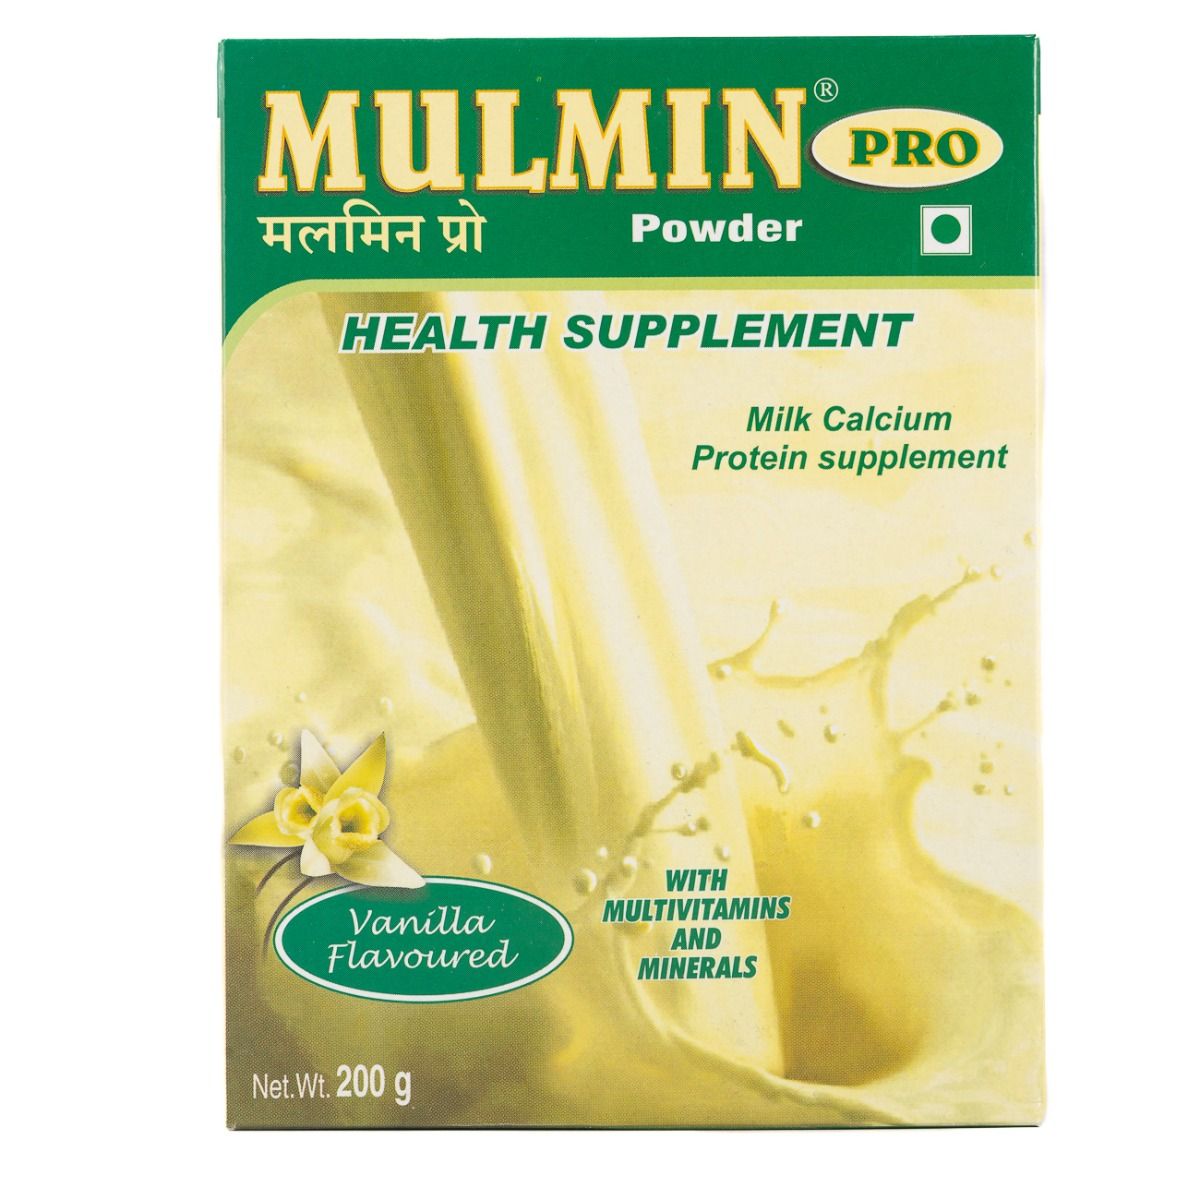 Mulmin Pro Health Supplement Powder, 200 gm, Pack of 1 